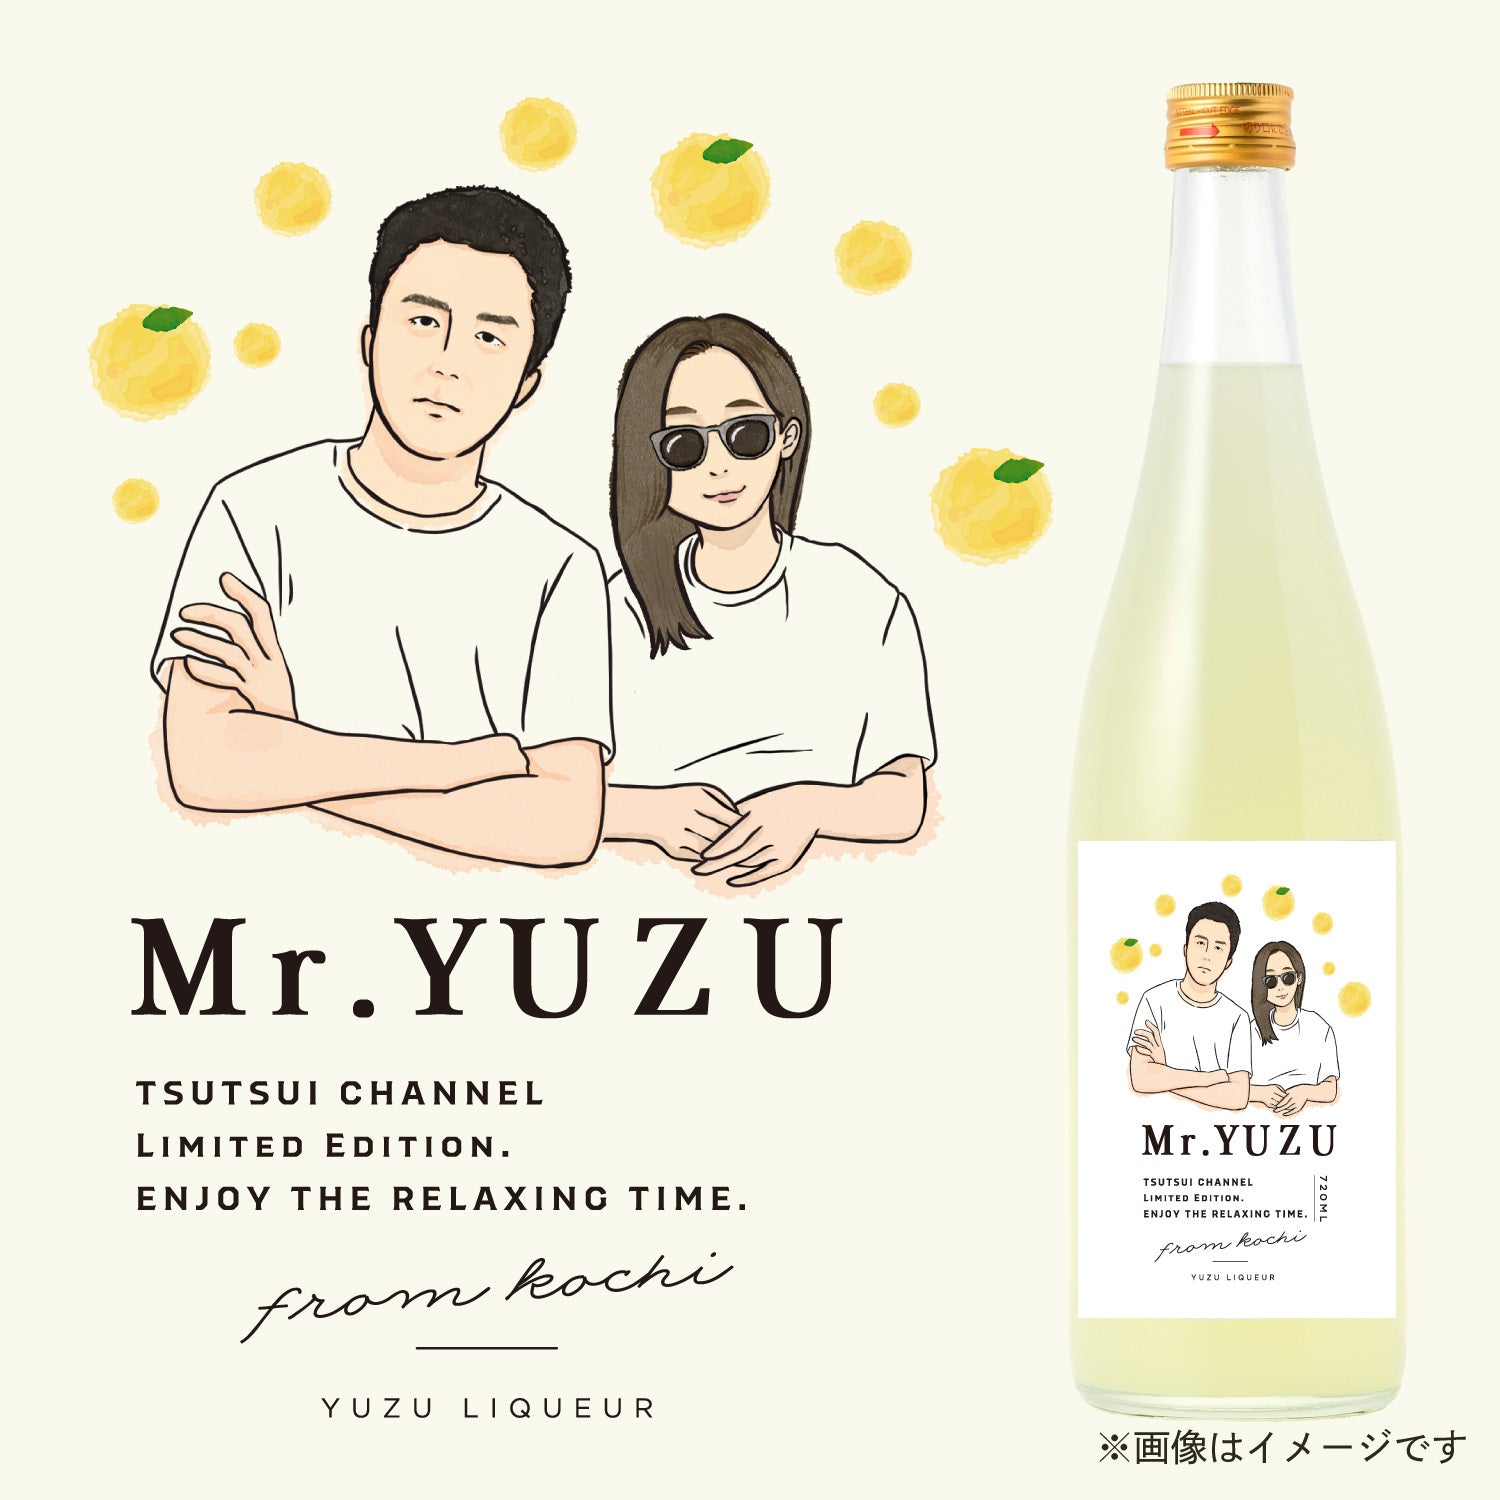 Mr.YUZU - 筒井チャンネル Limited Edition - | 高知県の果実酒 | 酒 